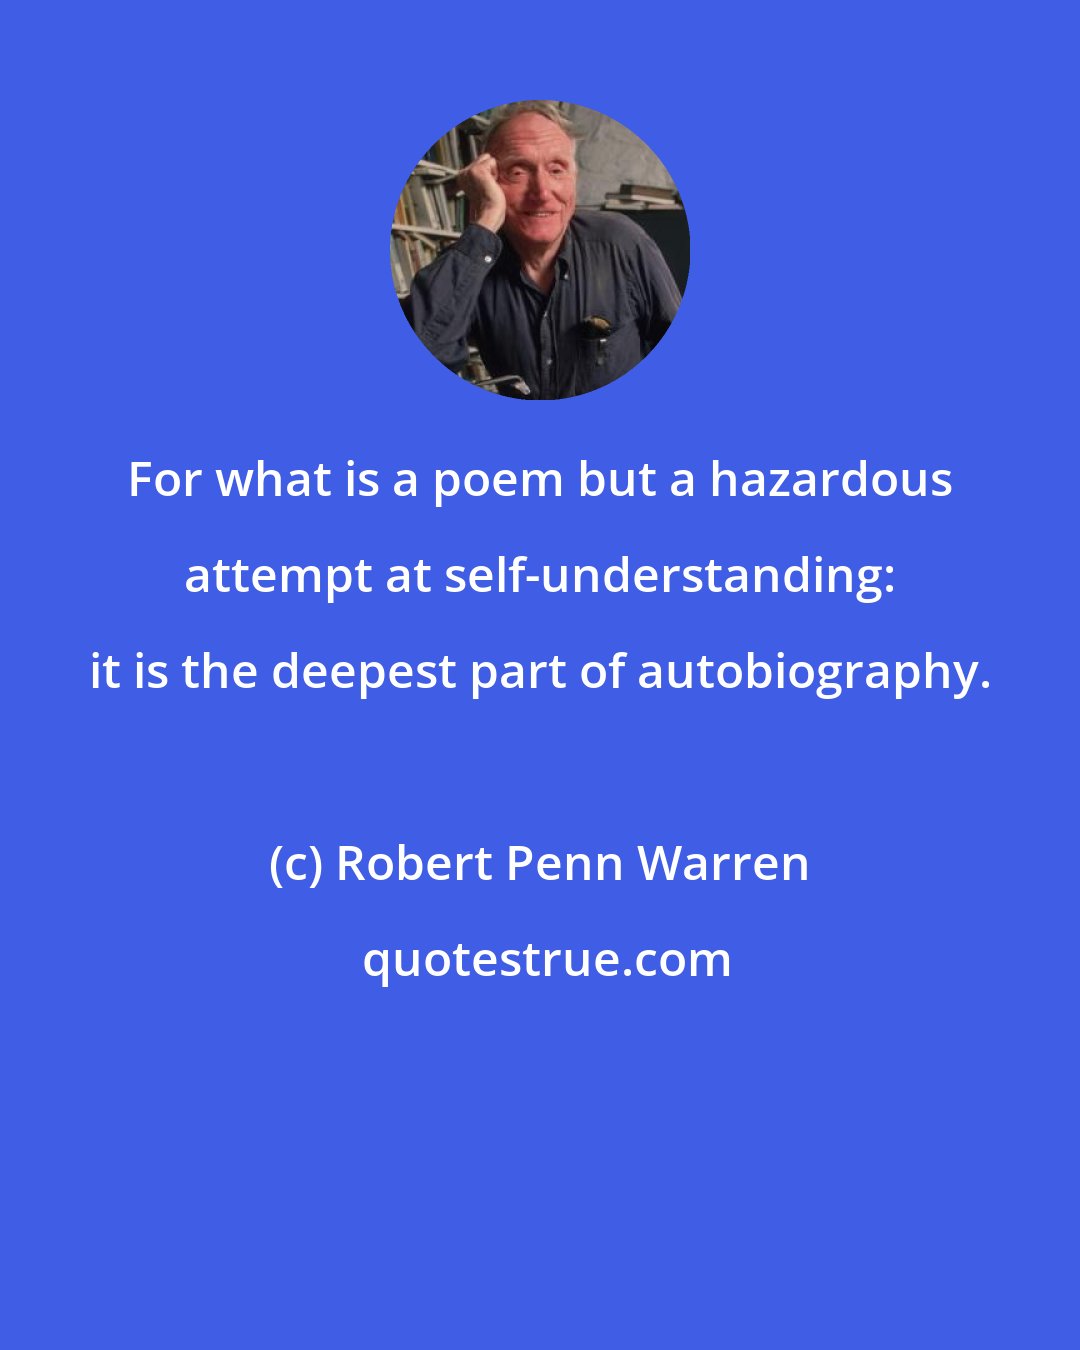 Robert Penn Warren: For what is a poem but a hazardous attempt at self-understanding: it is the deepest part of autobiography.